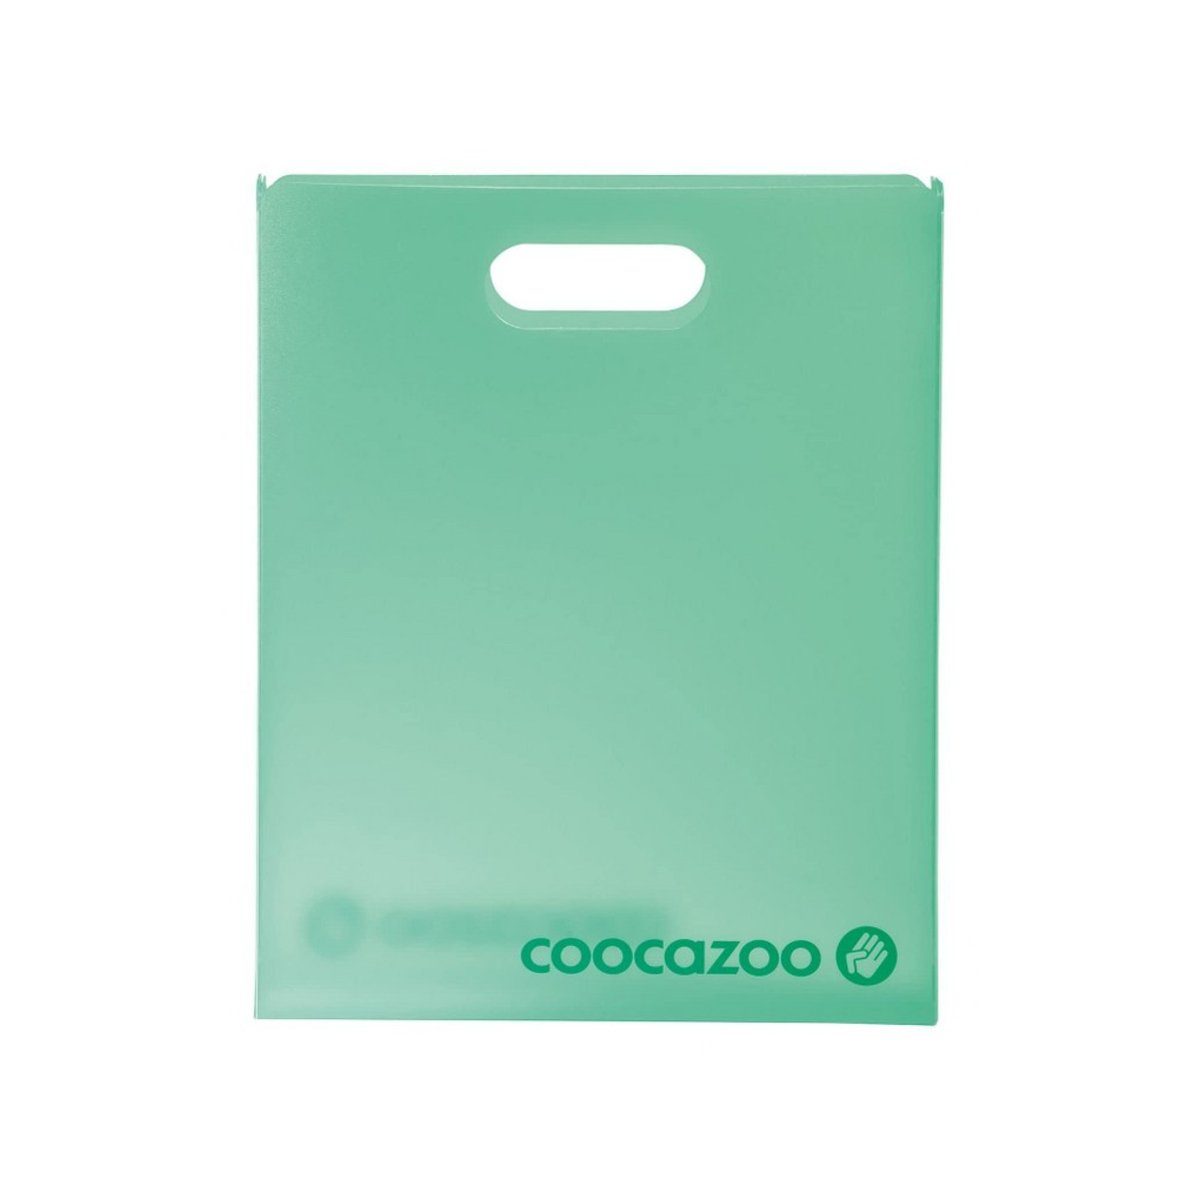 Mint Fresh coocazoo 1-St) Jerseymütze (keine Angabe, mintgrün